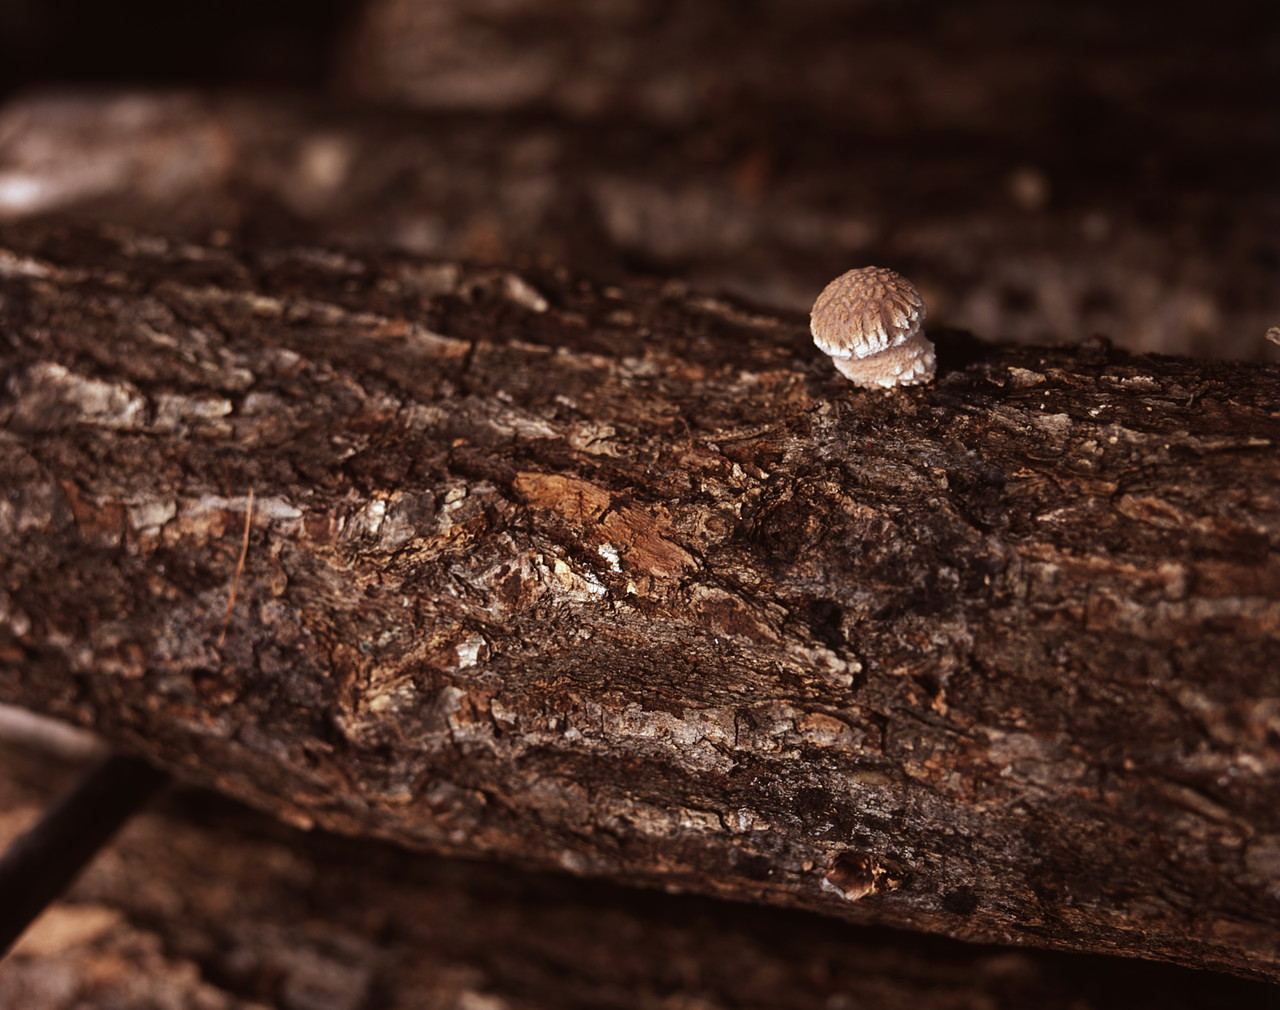 Baby mushrooms